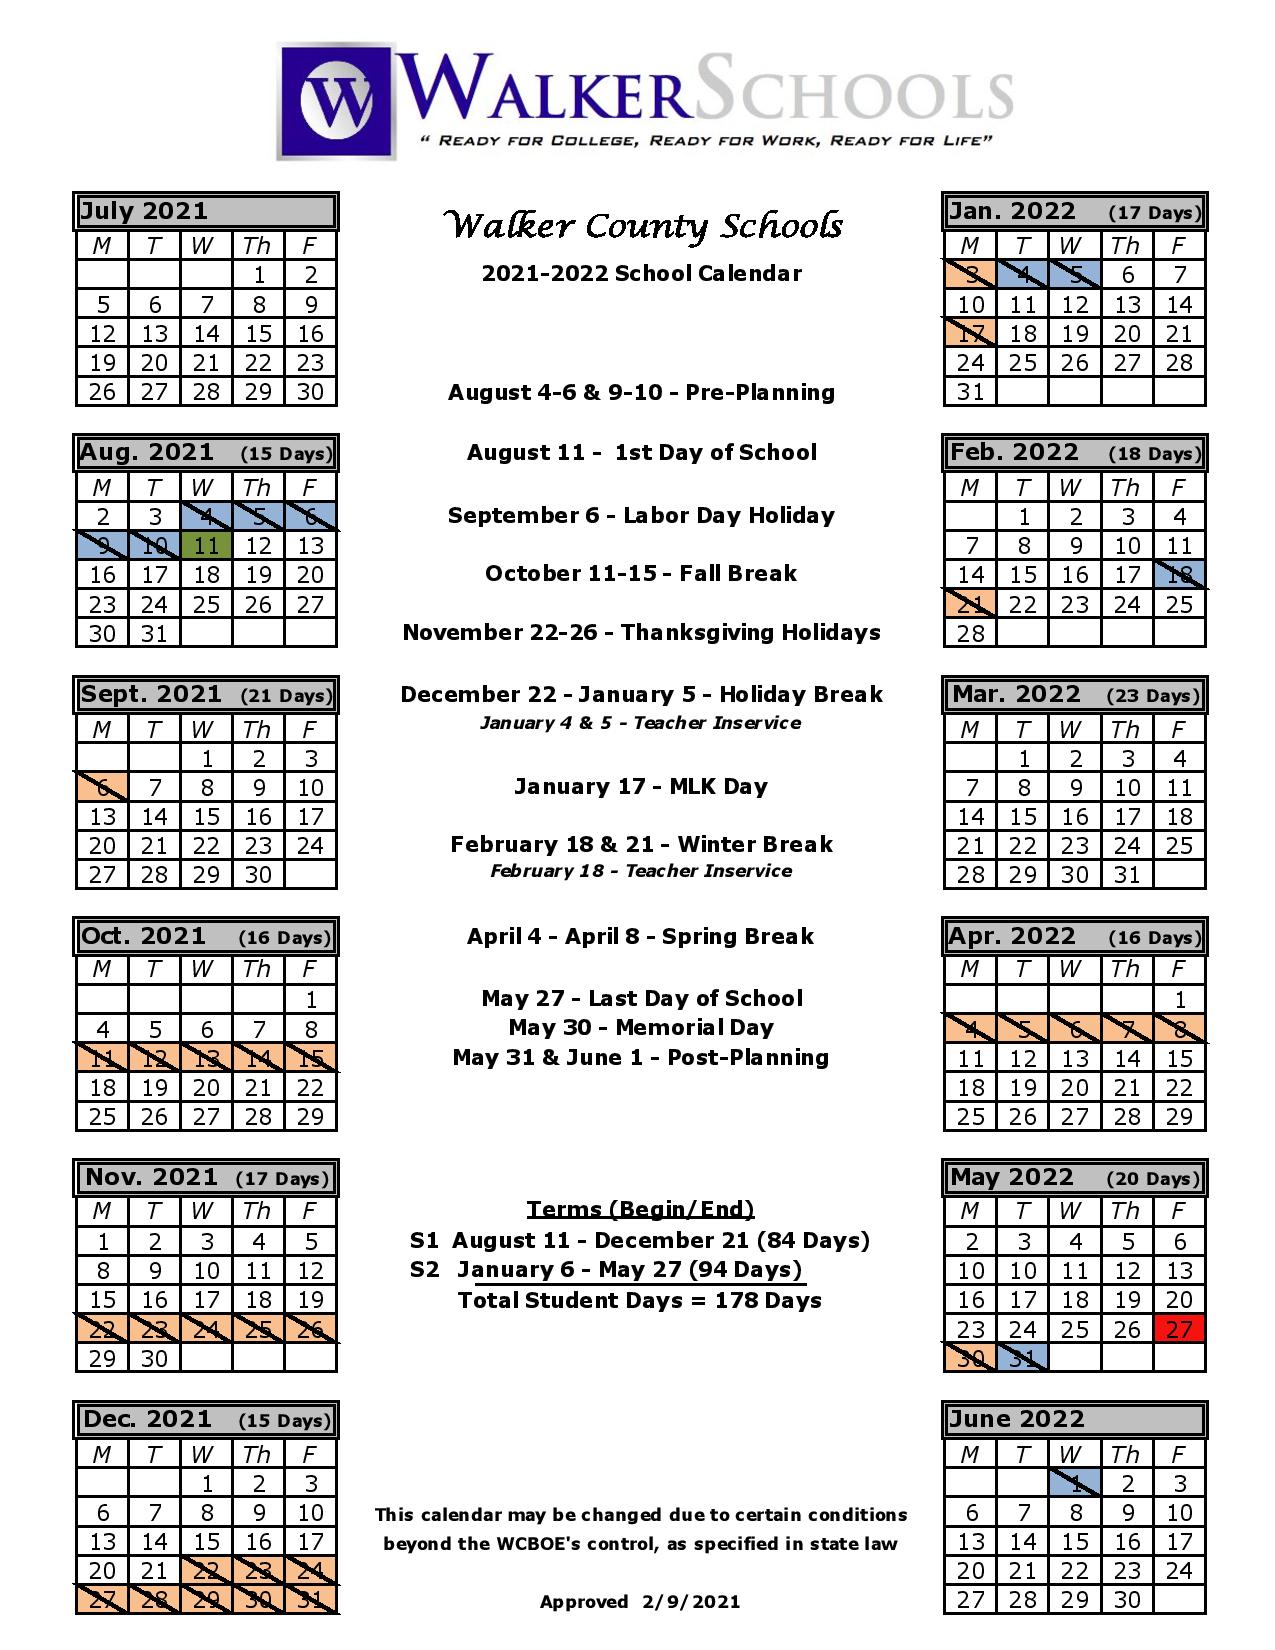 Walker County Schools Calendar 20212022 in PDF